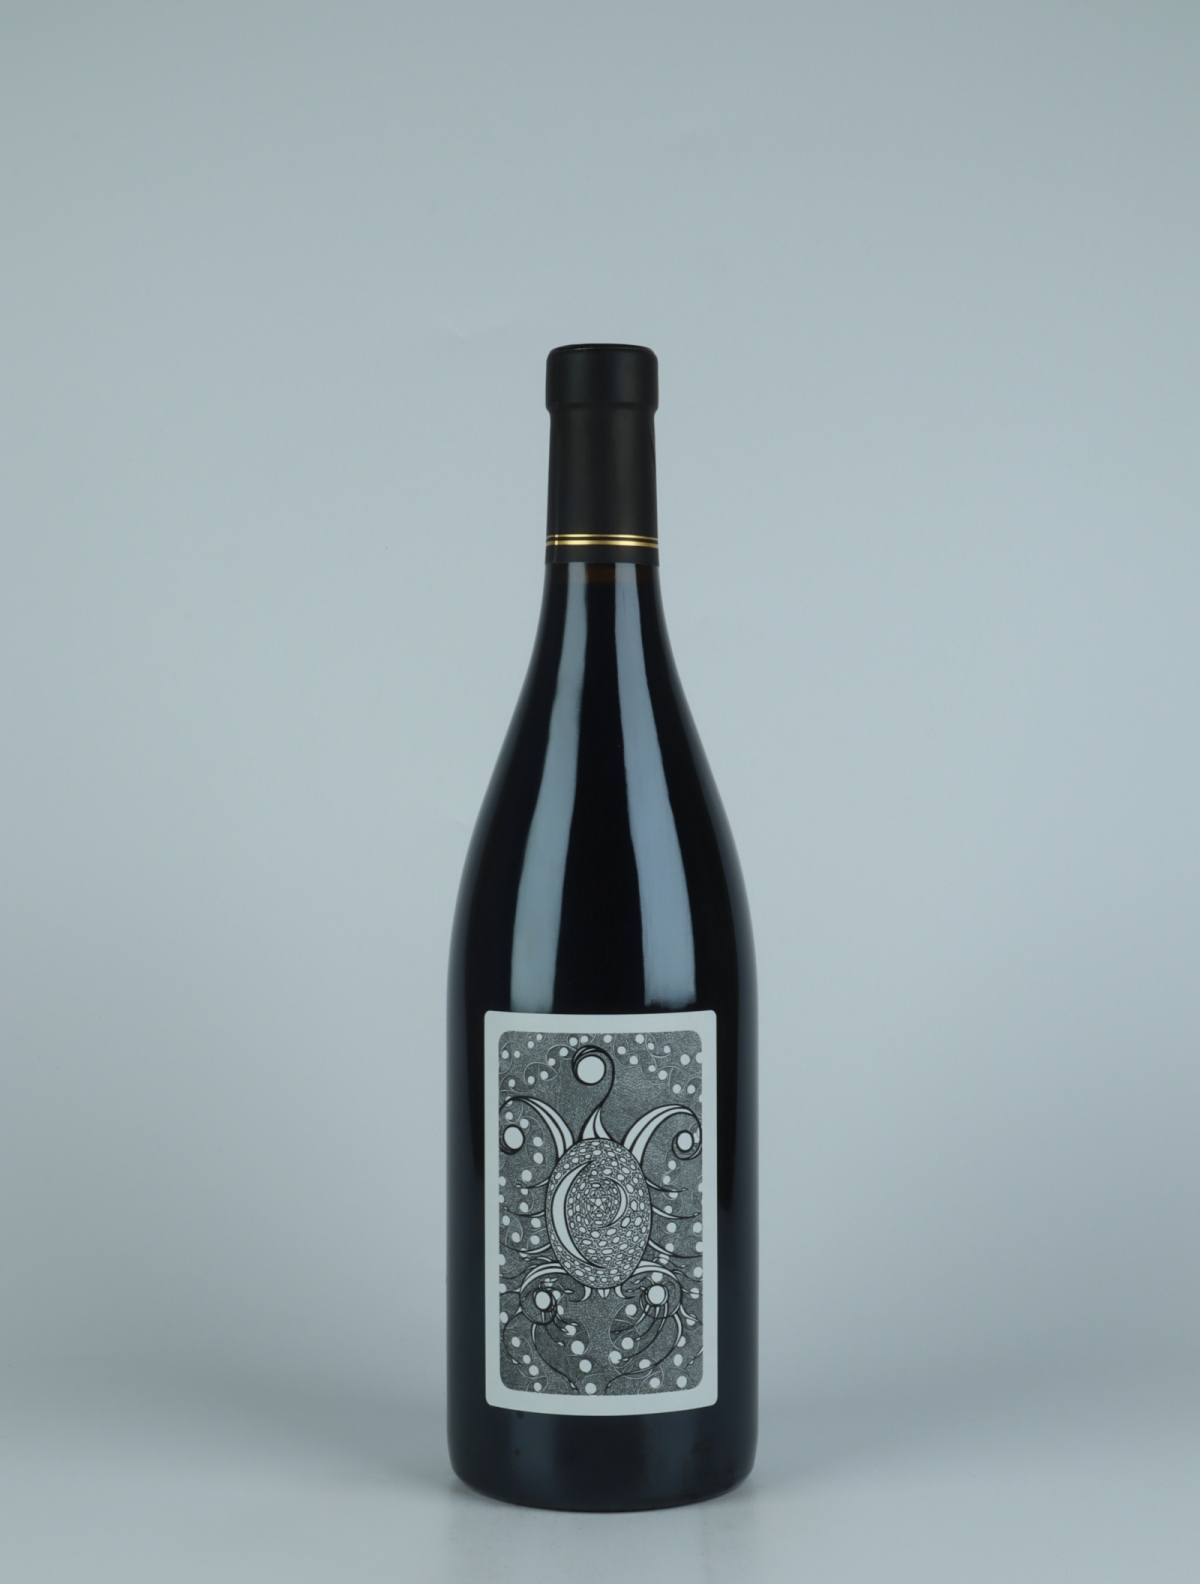 A bottle 2020 Elements Red wine from Julien Courtois, Loire in France